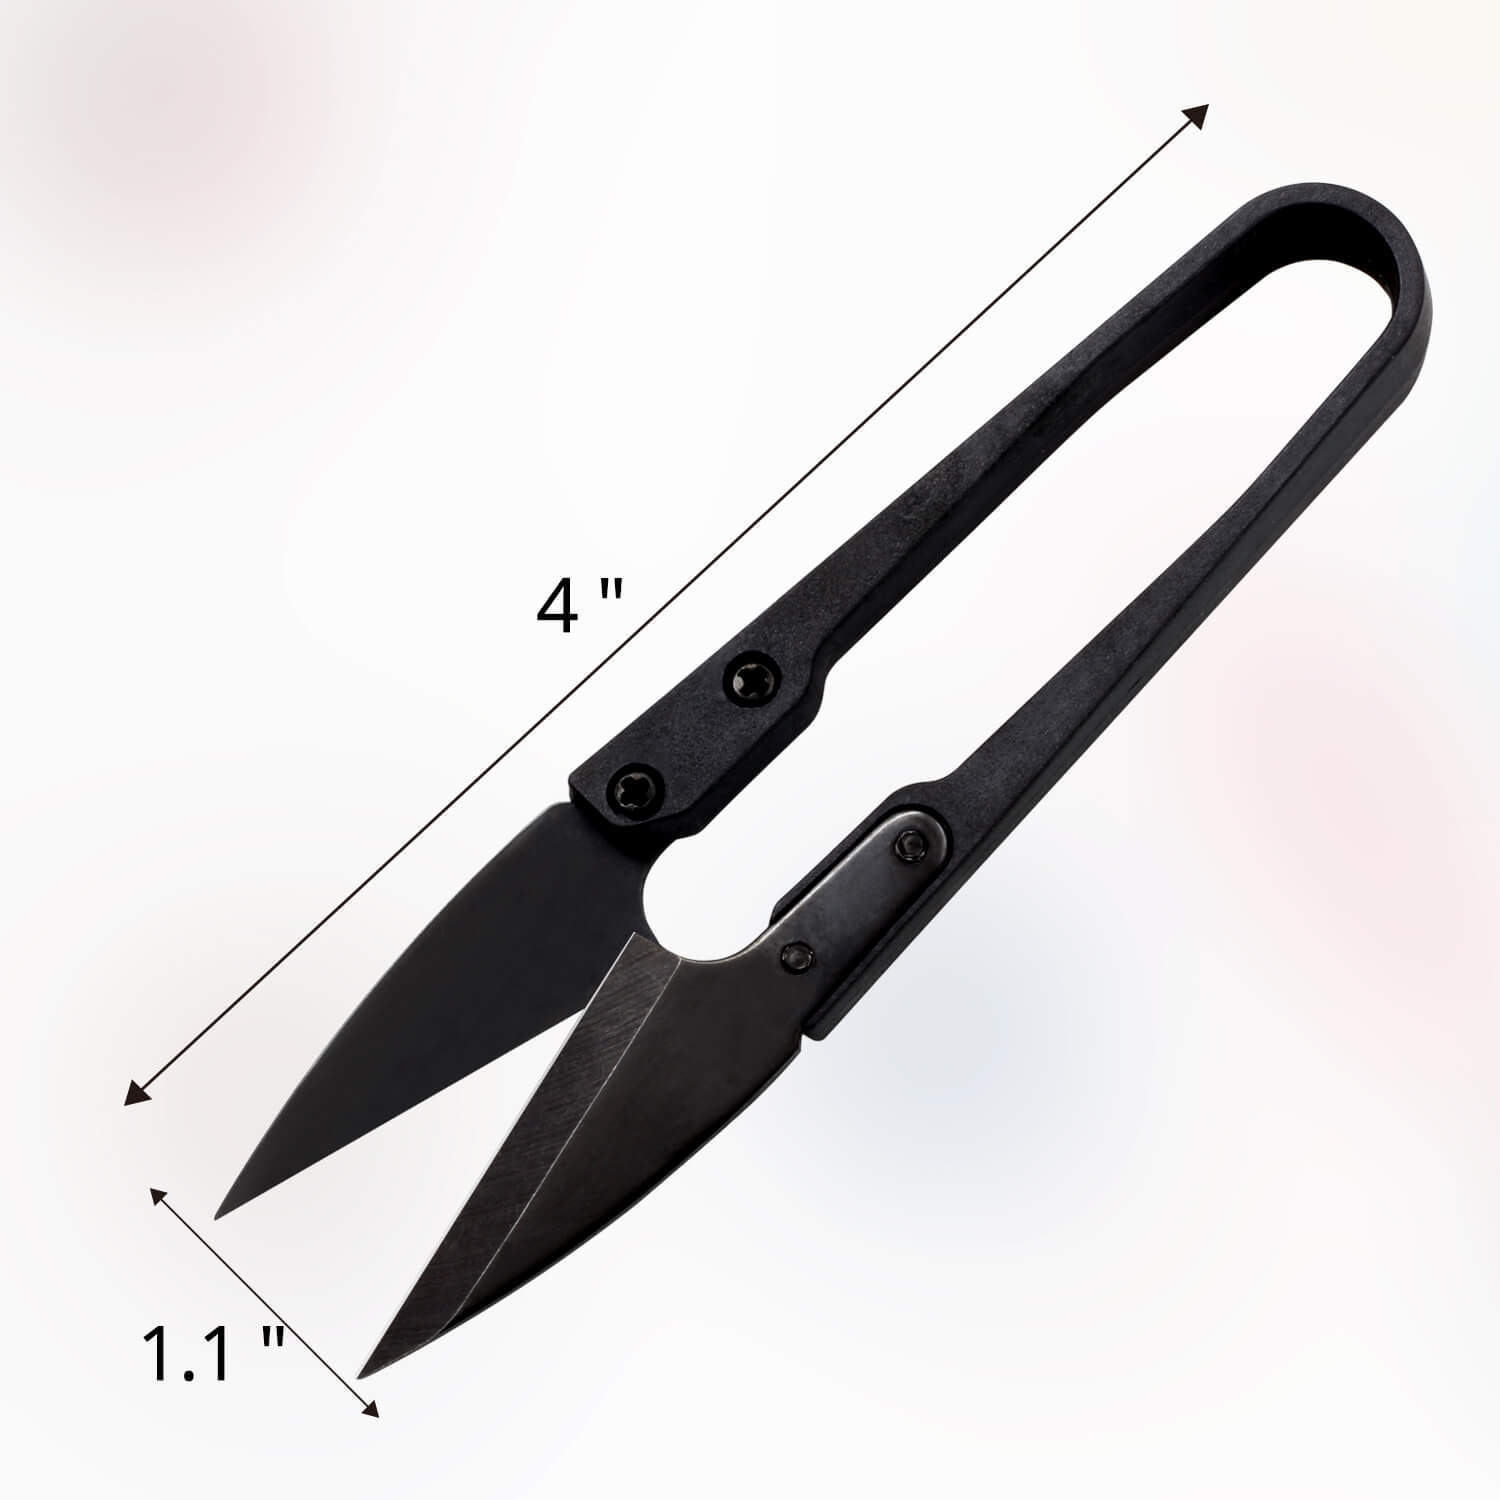 https://www.anley.com/wp-content/uploads/2020/04/4-Sewing-Scissors-Set-2-1.jpg